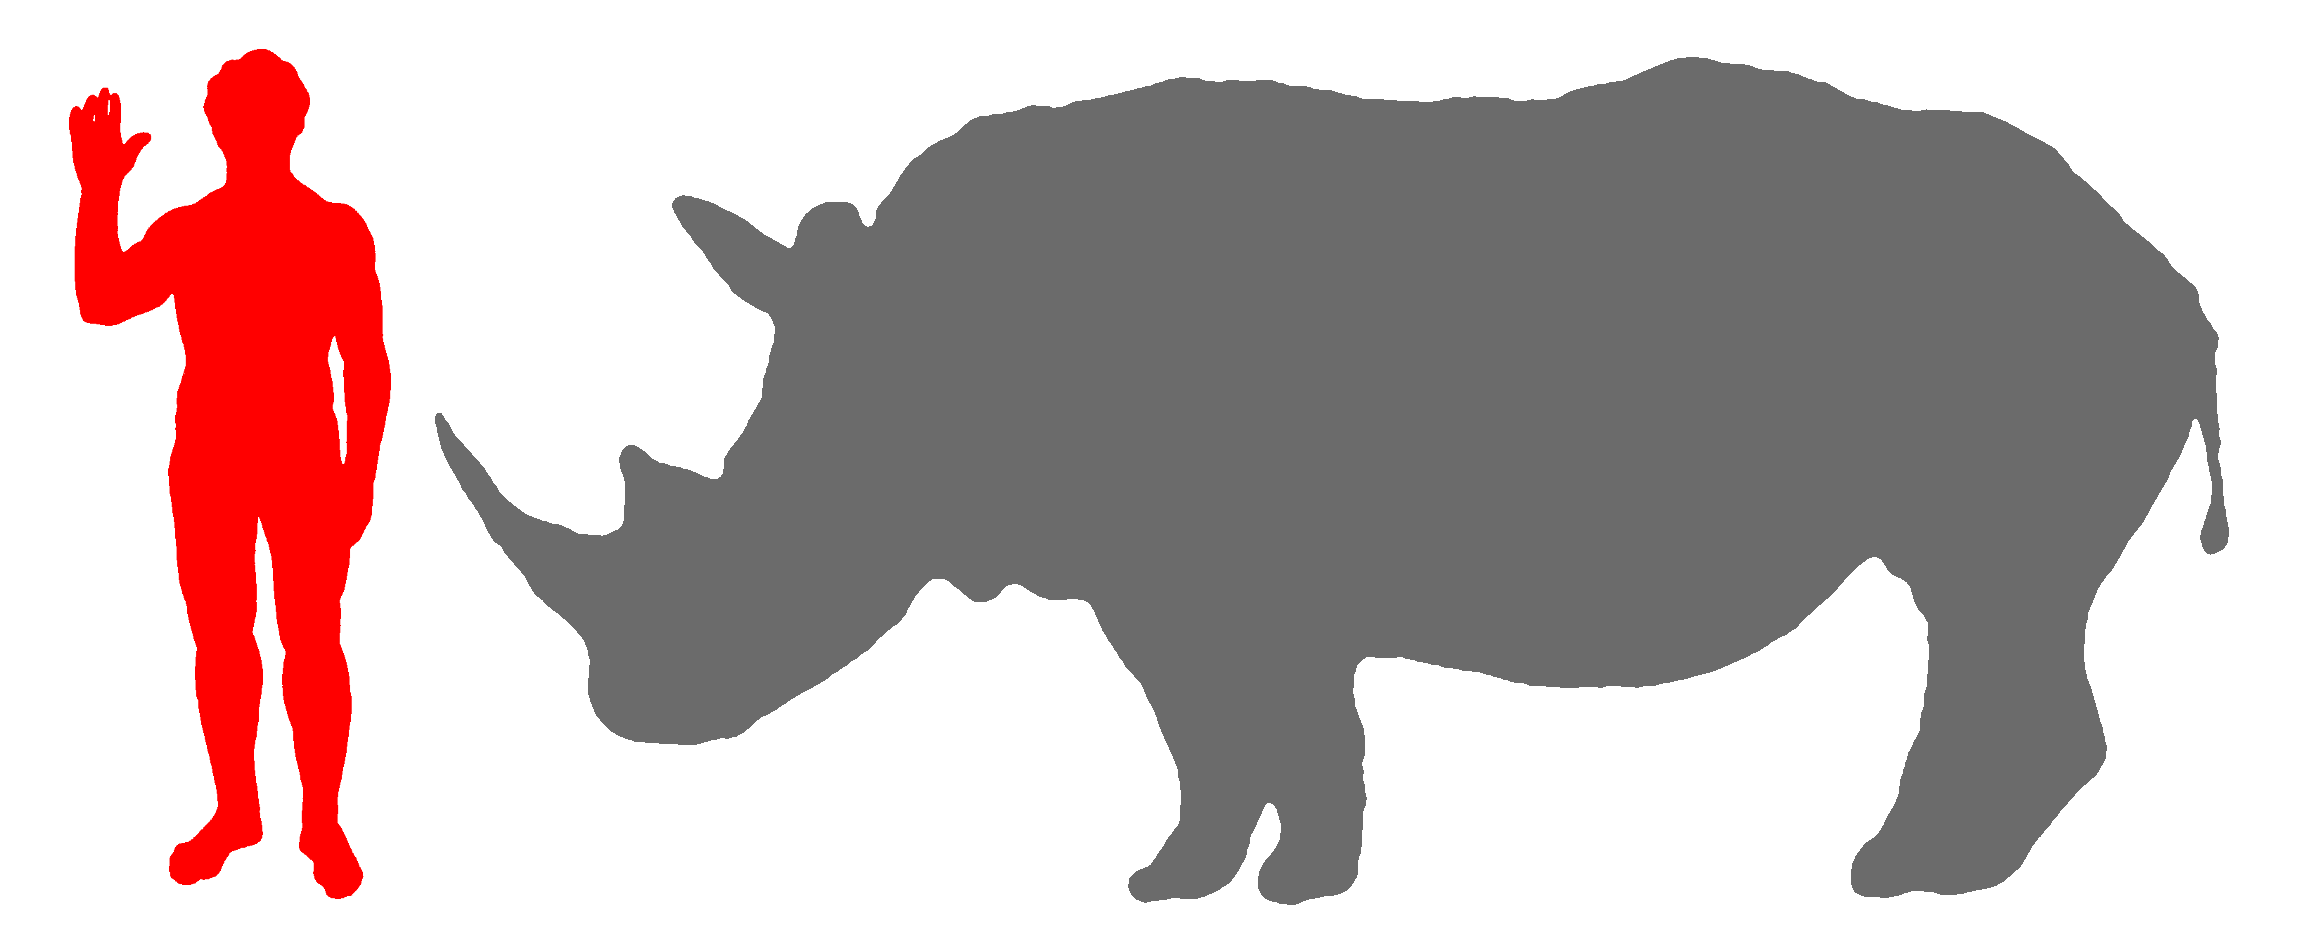 Footprint rhino